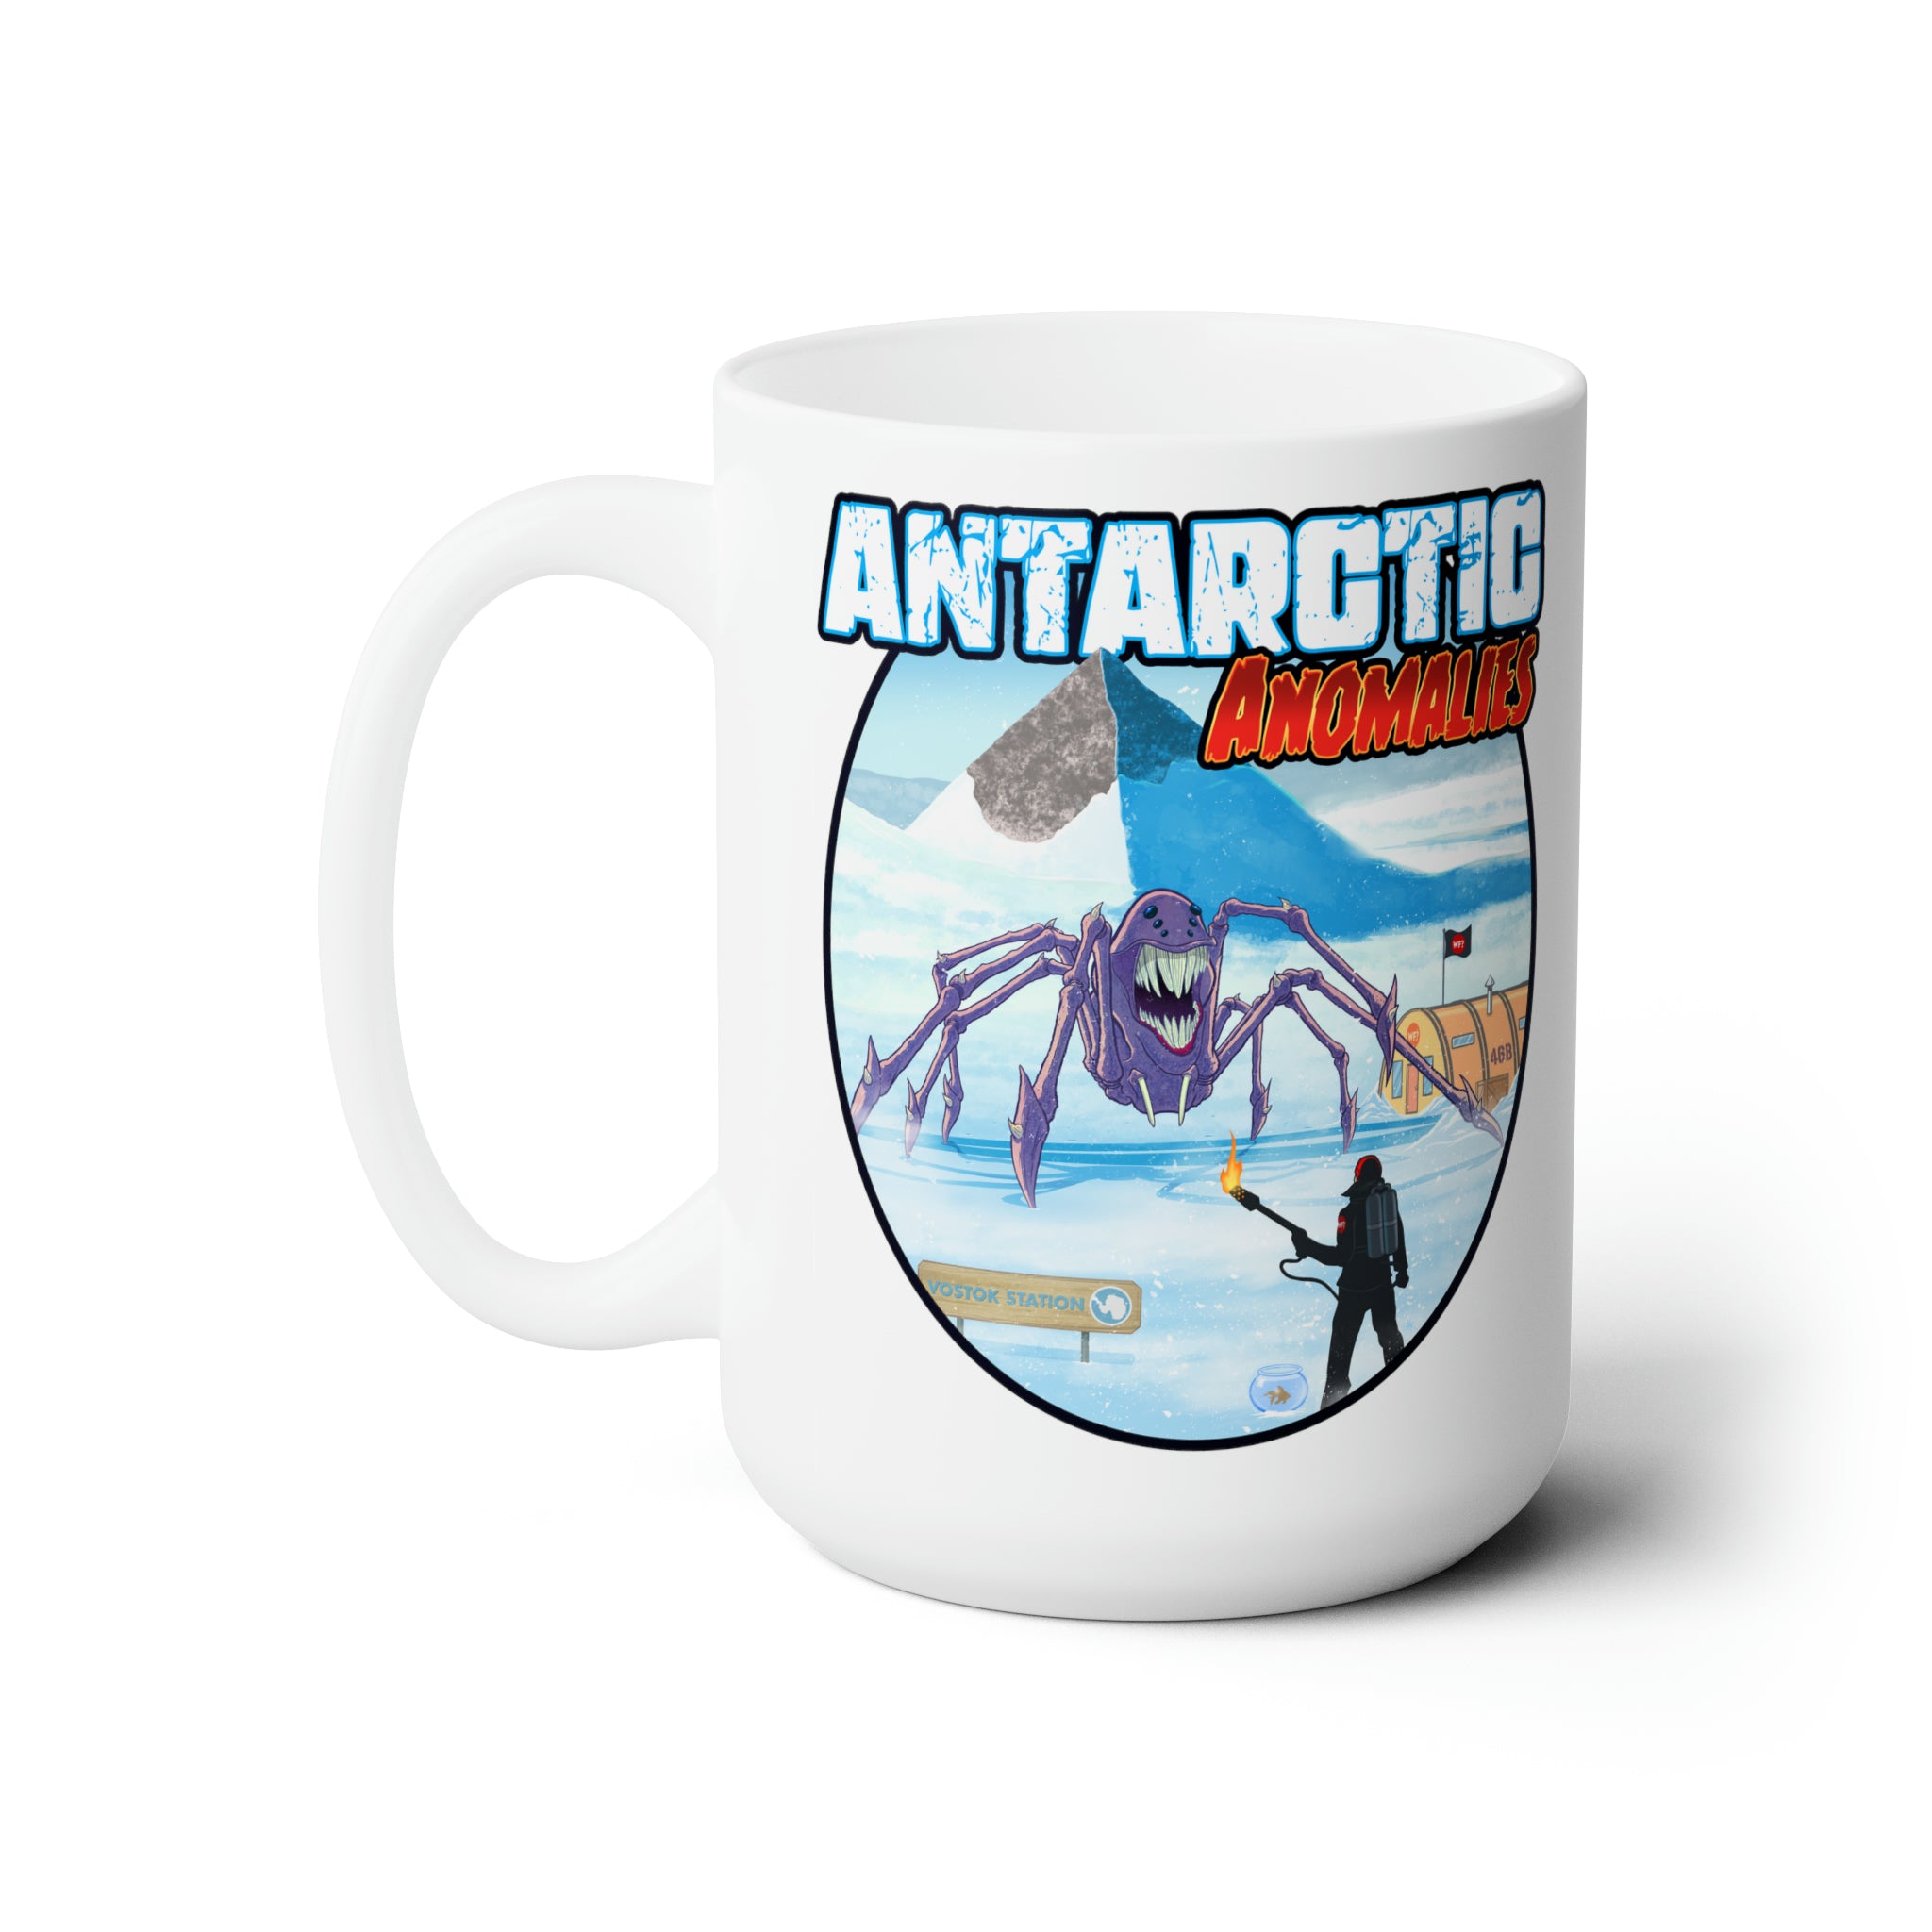 2/22 Antarctic Anomalies Ceramic Mug 15oz - 0